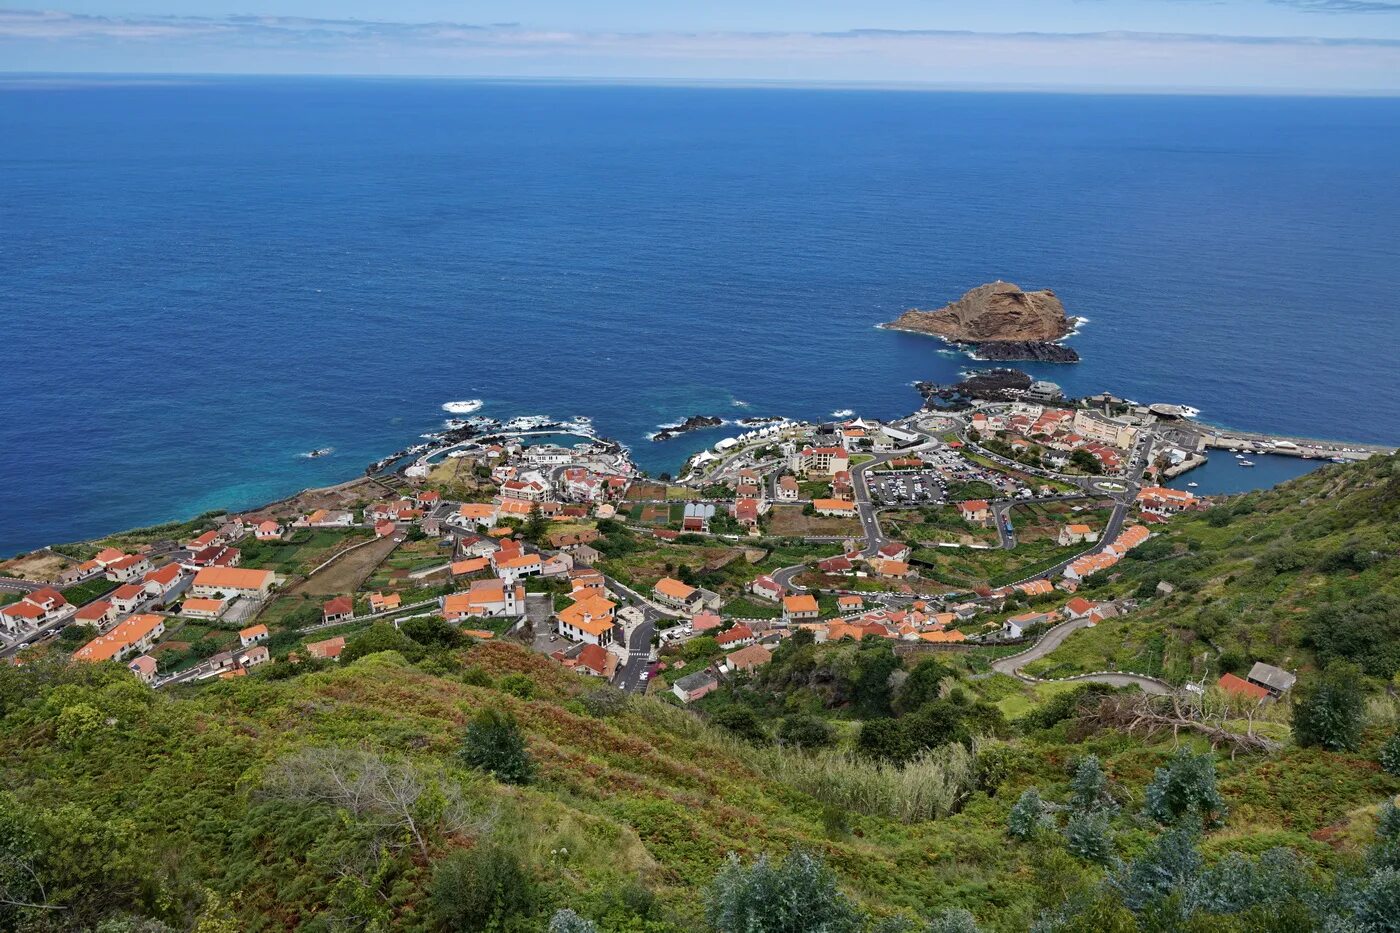 Порту Мониш Мадейра. Остров Мадейра Португалия. Фуншал Мадейра Португалия. Мадейра (автономный регион).